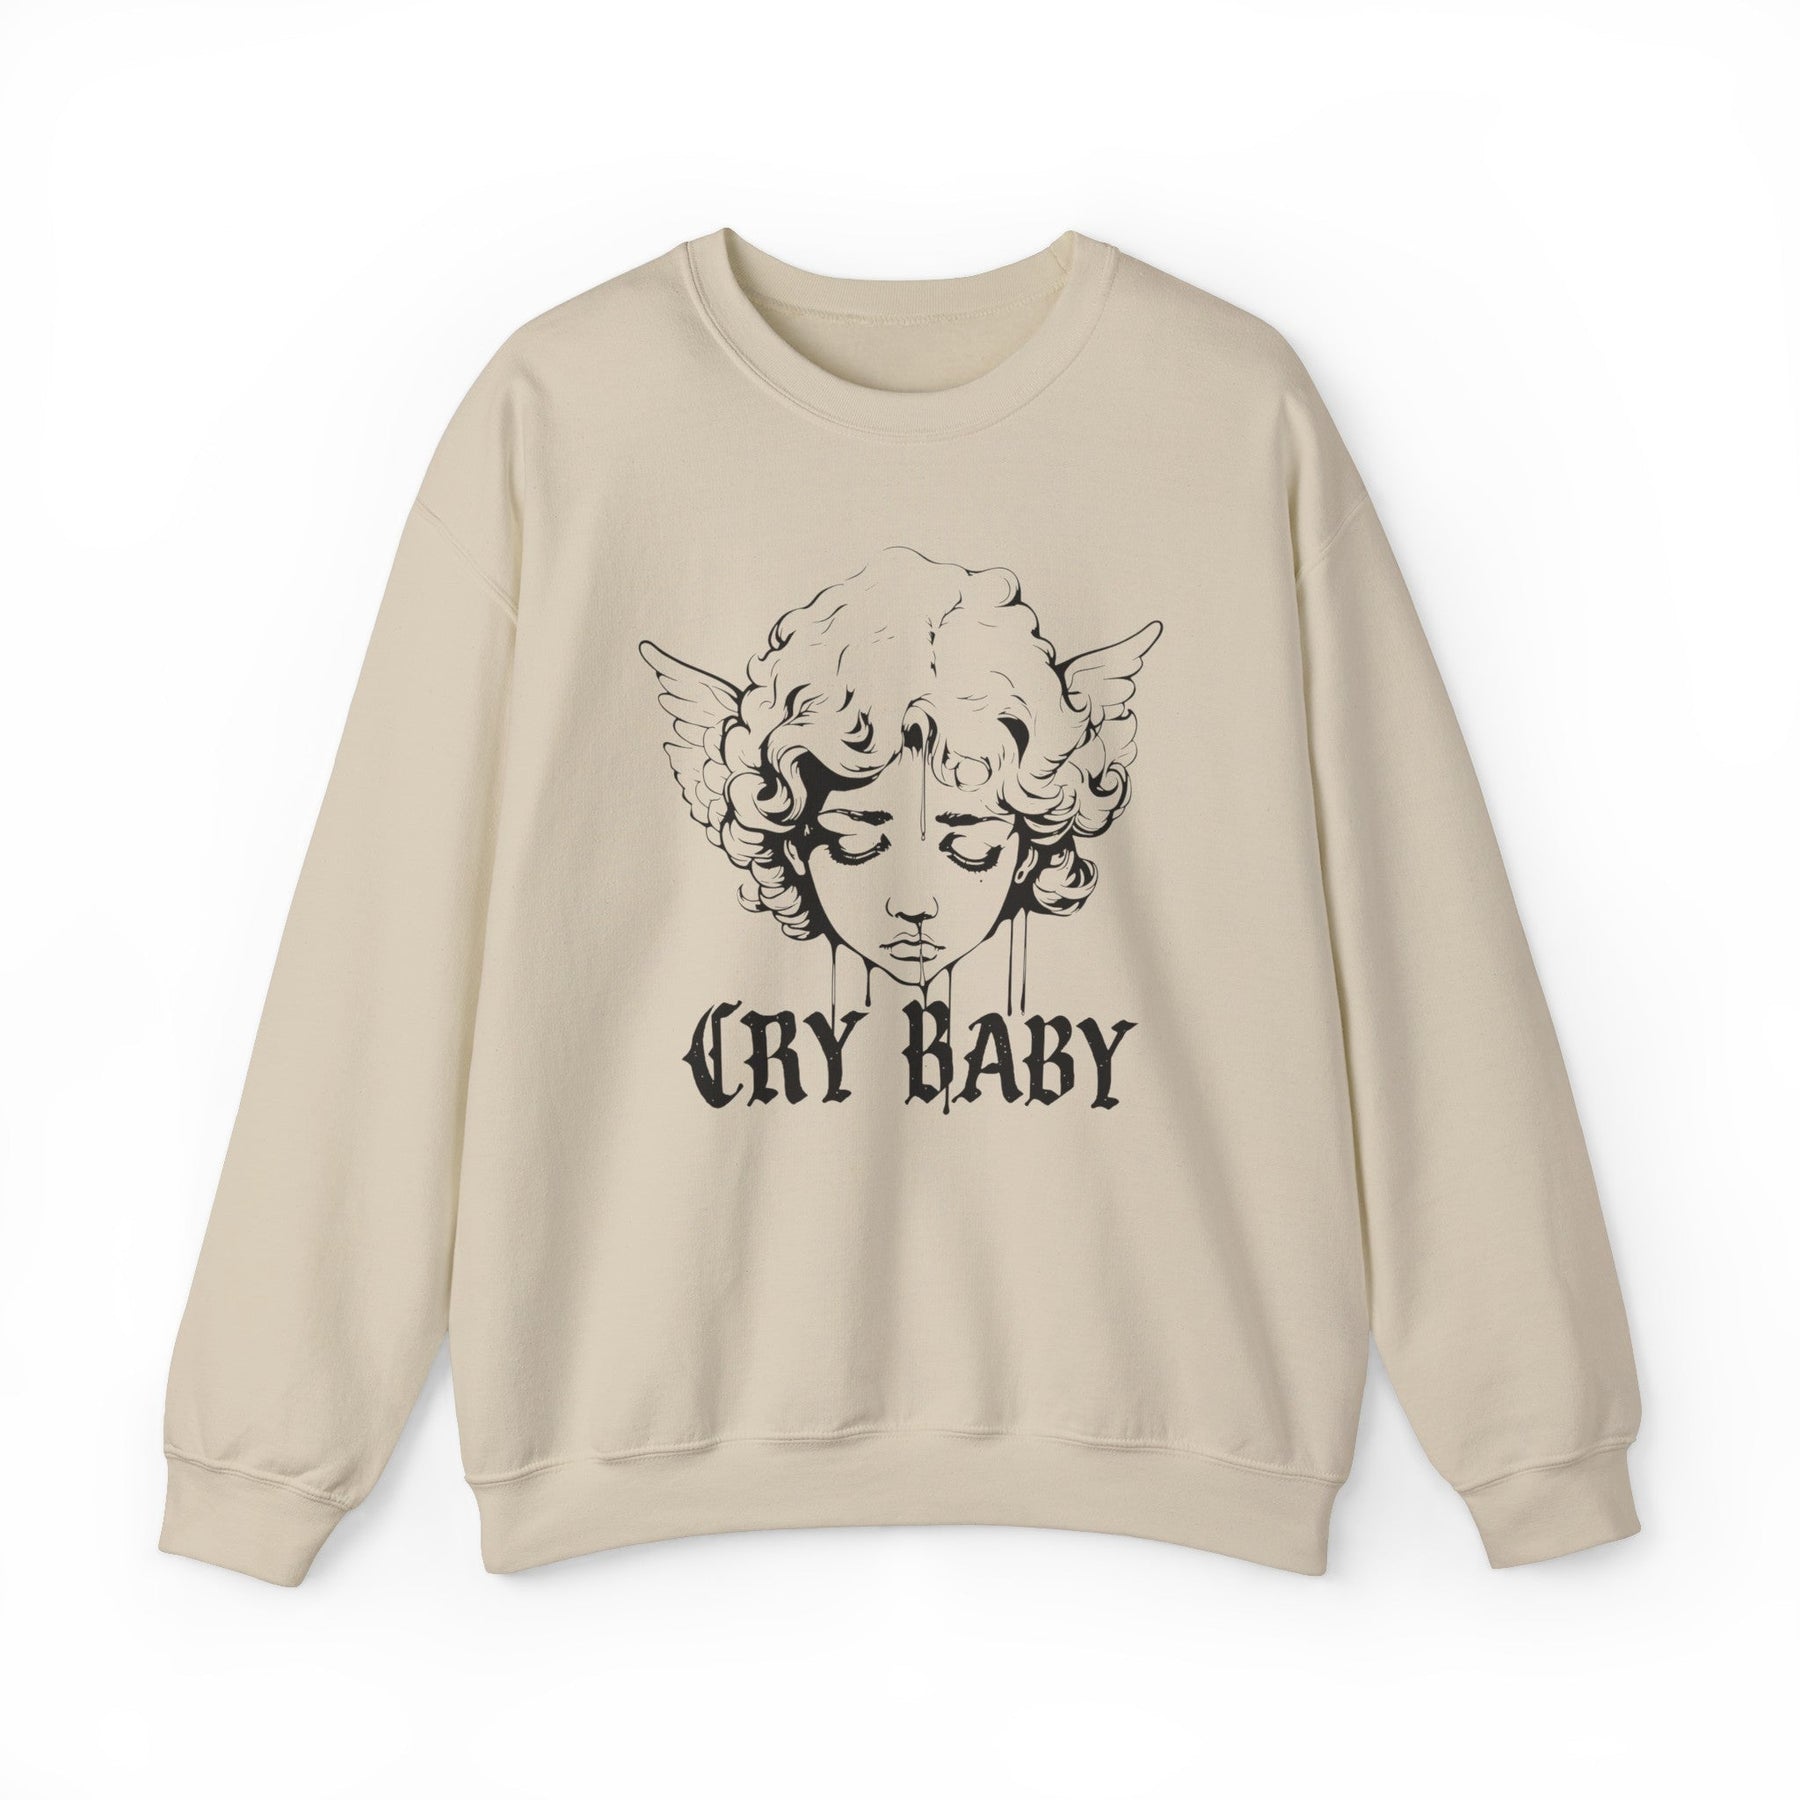 Crybaby Graffiti Cherub Crew Neck Sweatshirt - Goth Cloth Co.Sweatshirt23303205599110934723